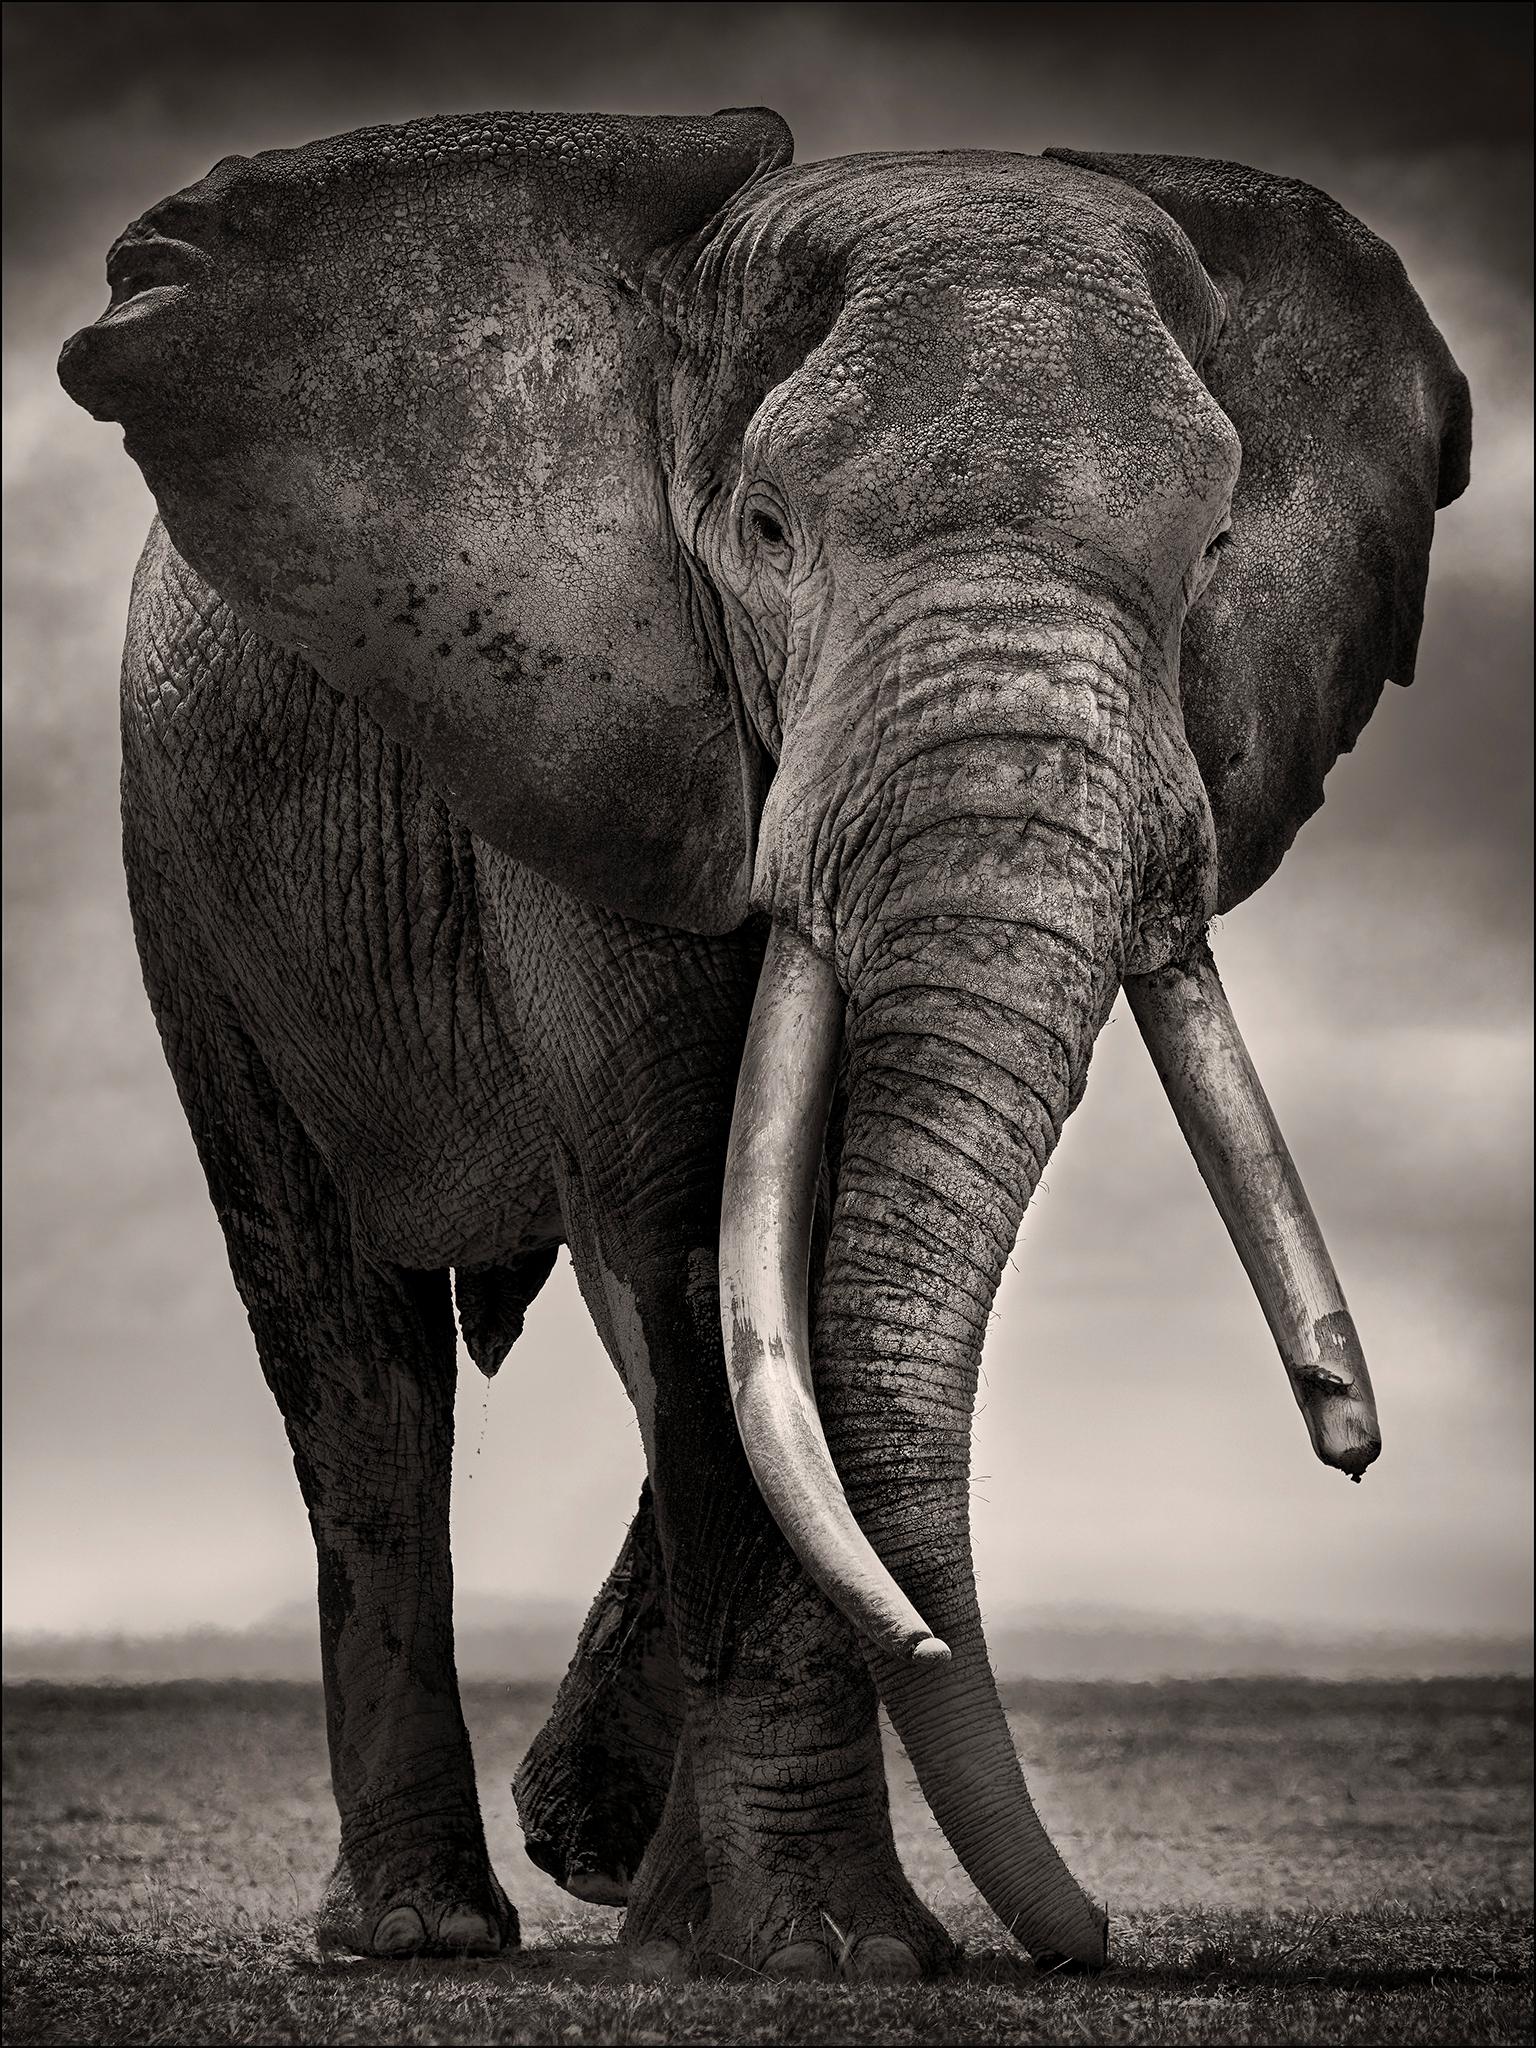 Joachim Schmeisser Black and White Photograph - Primo, Kenya, Elephant, b&w photography, wildlife